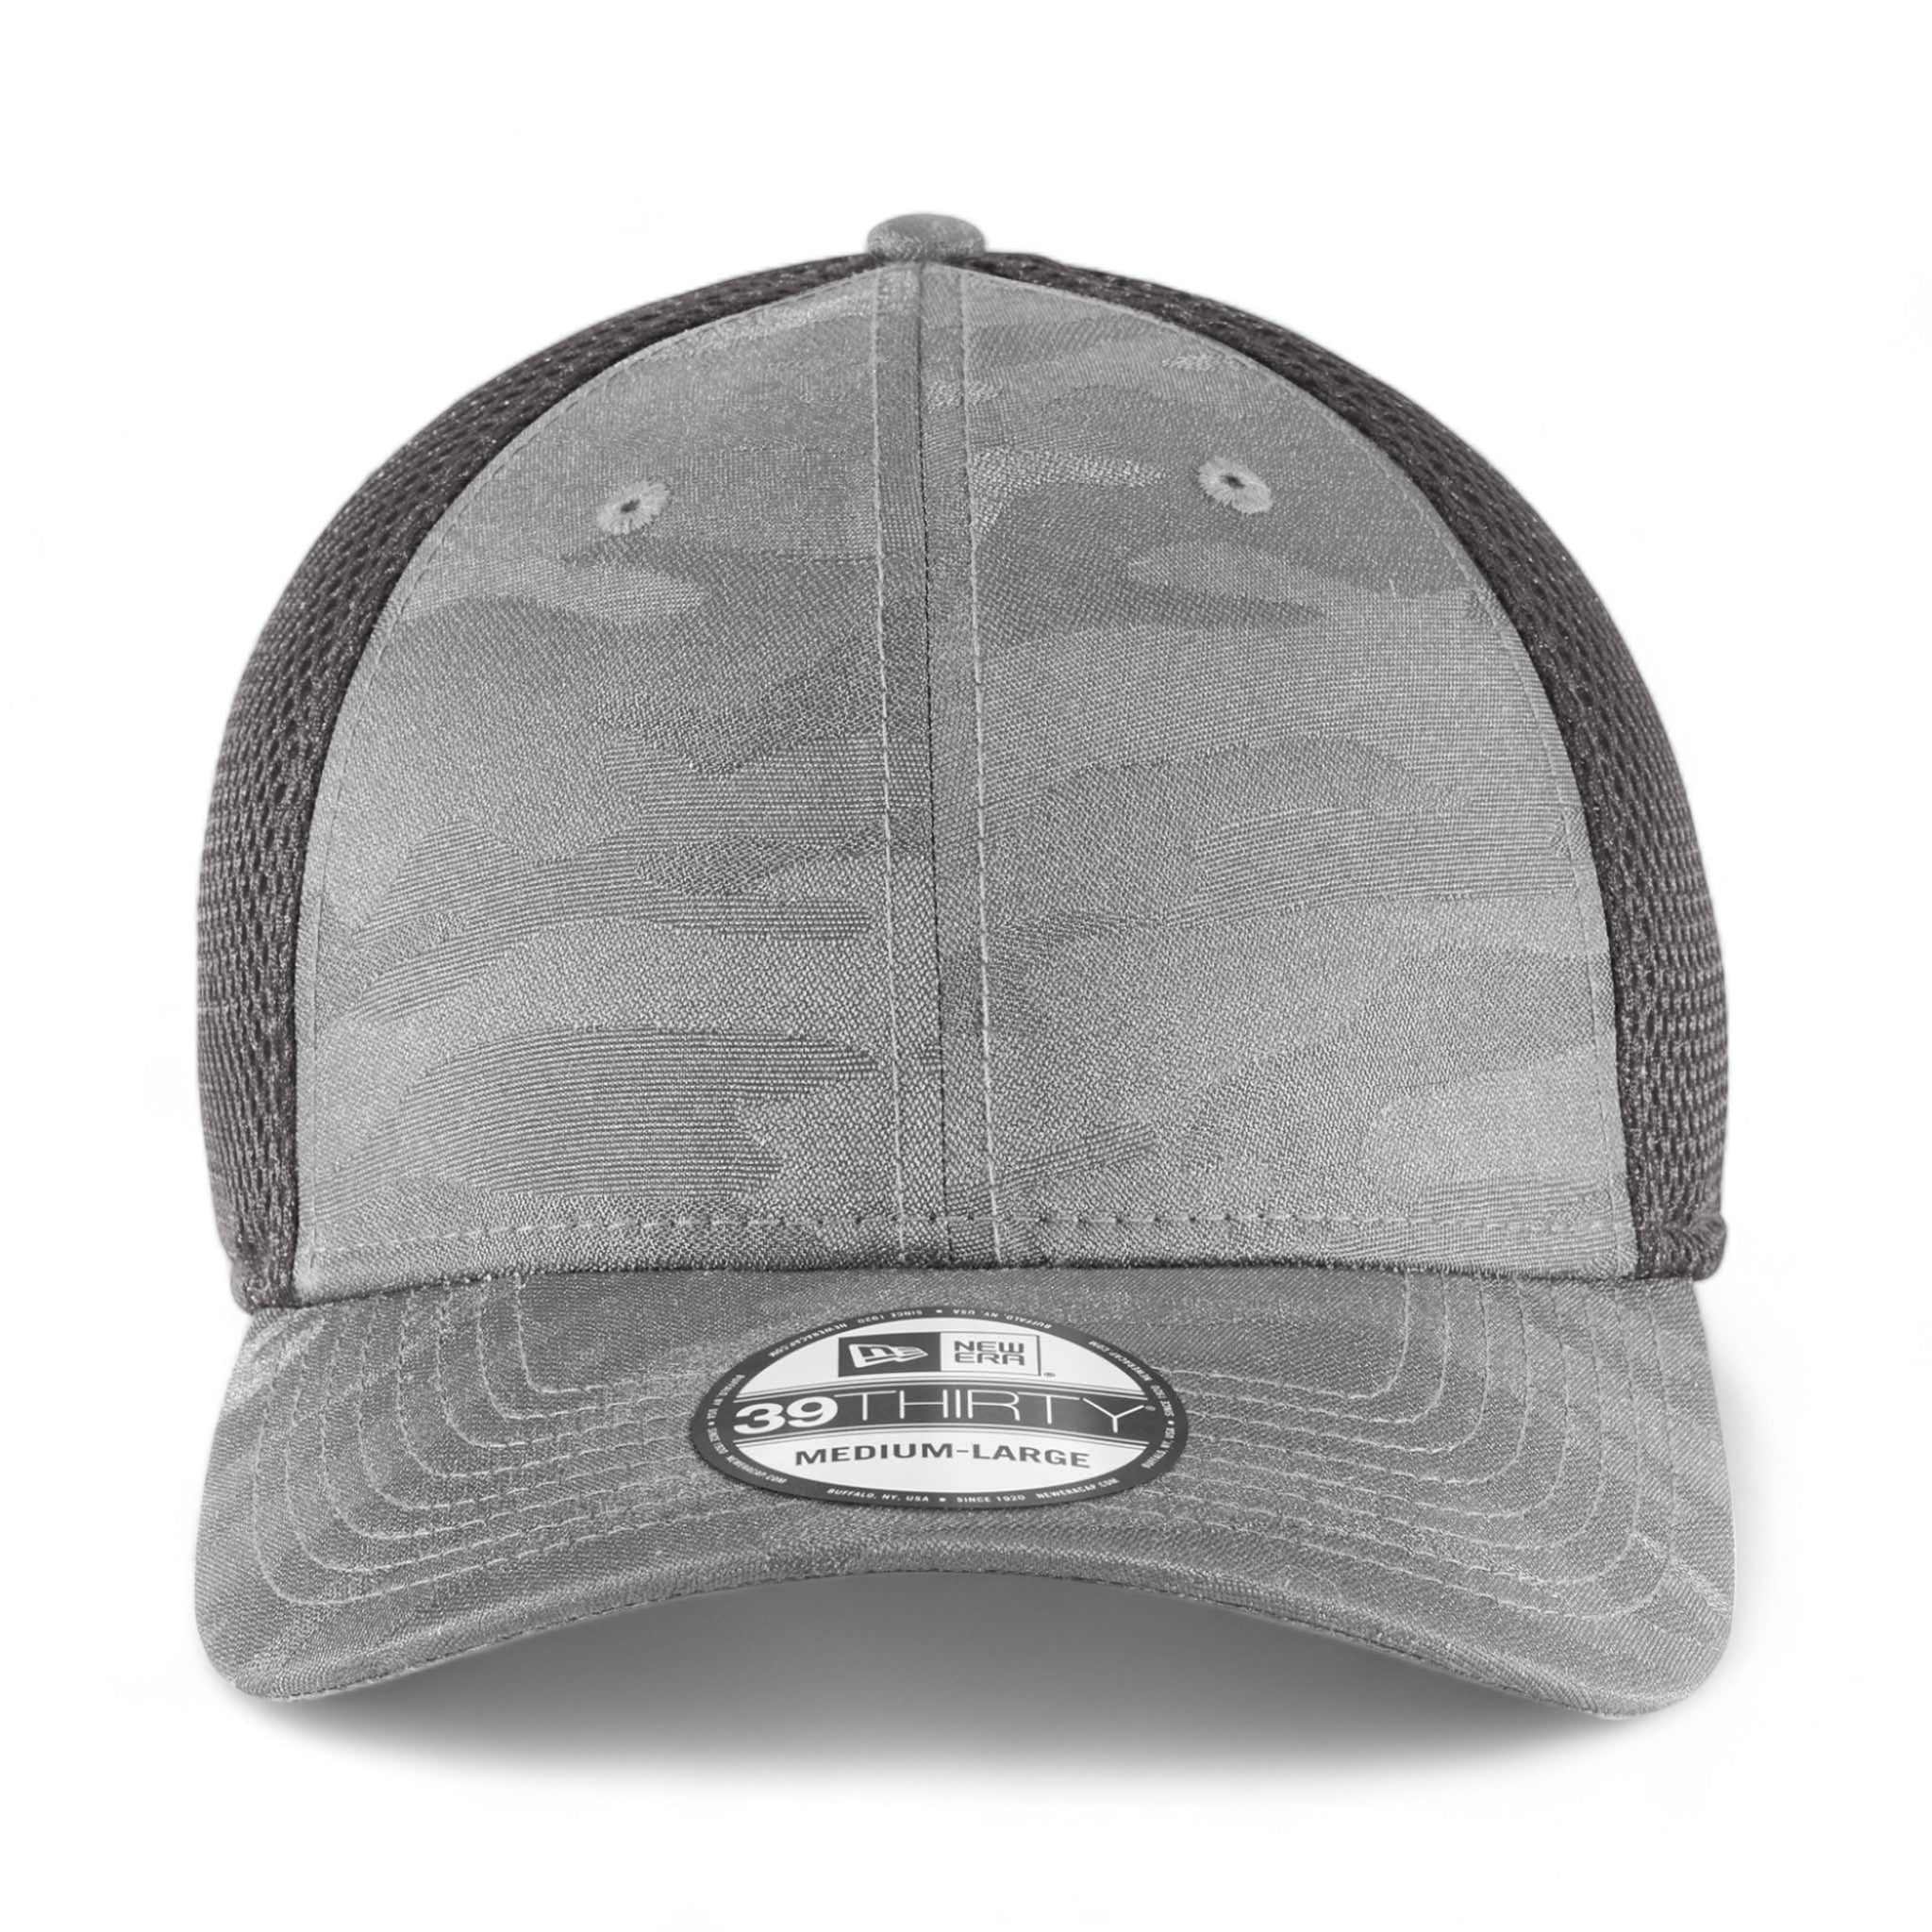 Front view of New Era NE1091 custom hat in rainstorm grey camo and graphite